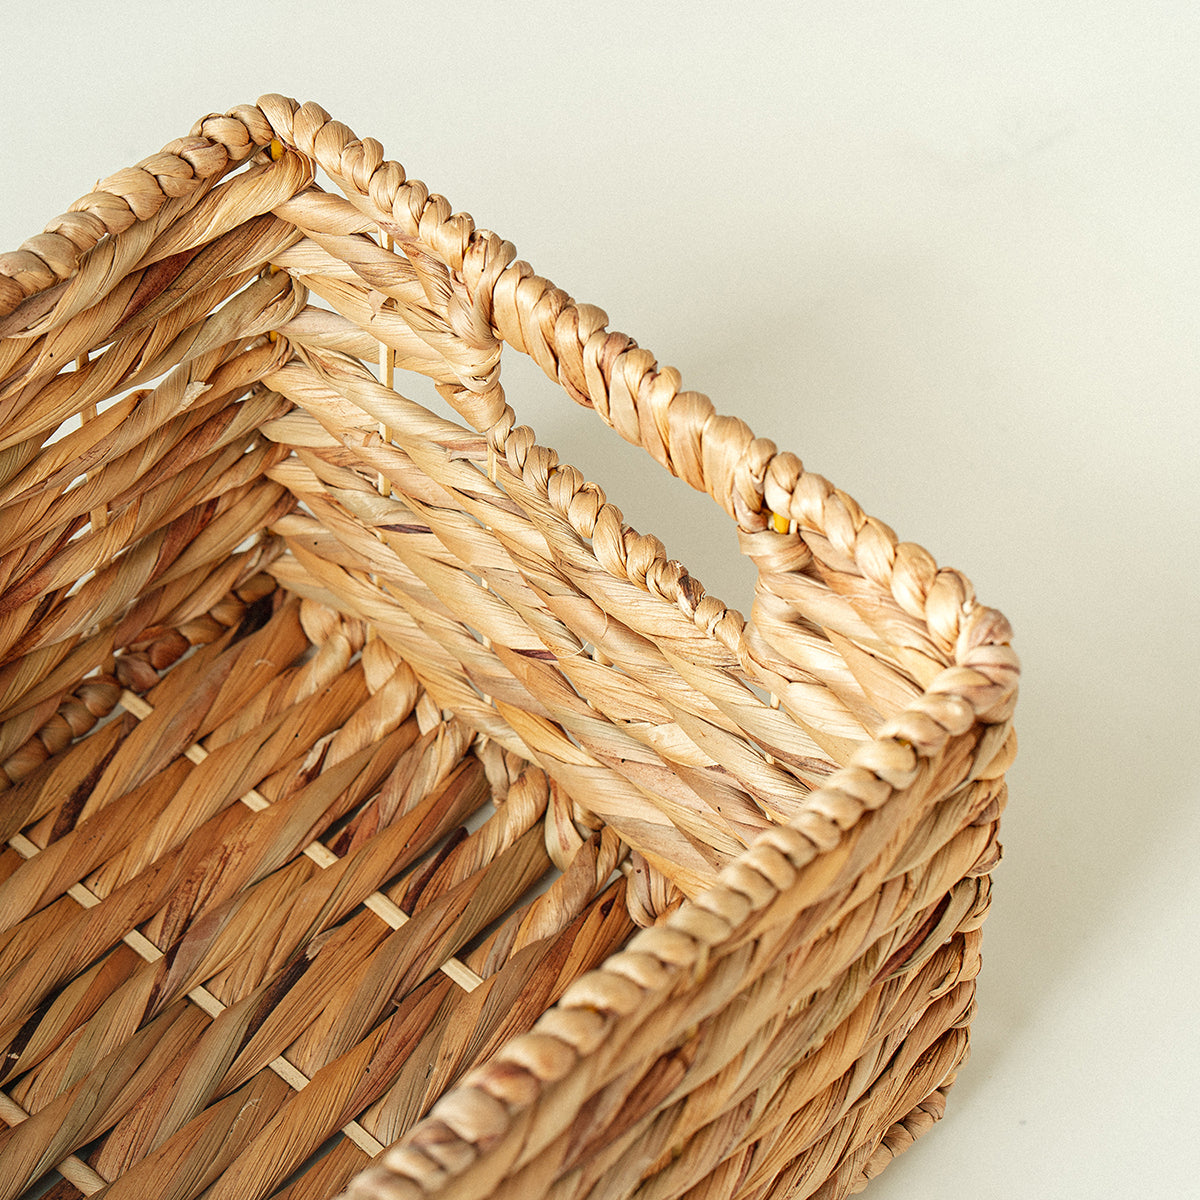 dark-brown-natural-cube-storage-basket